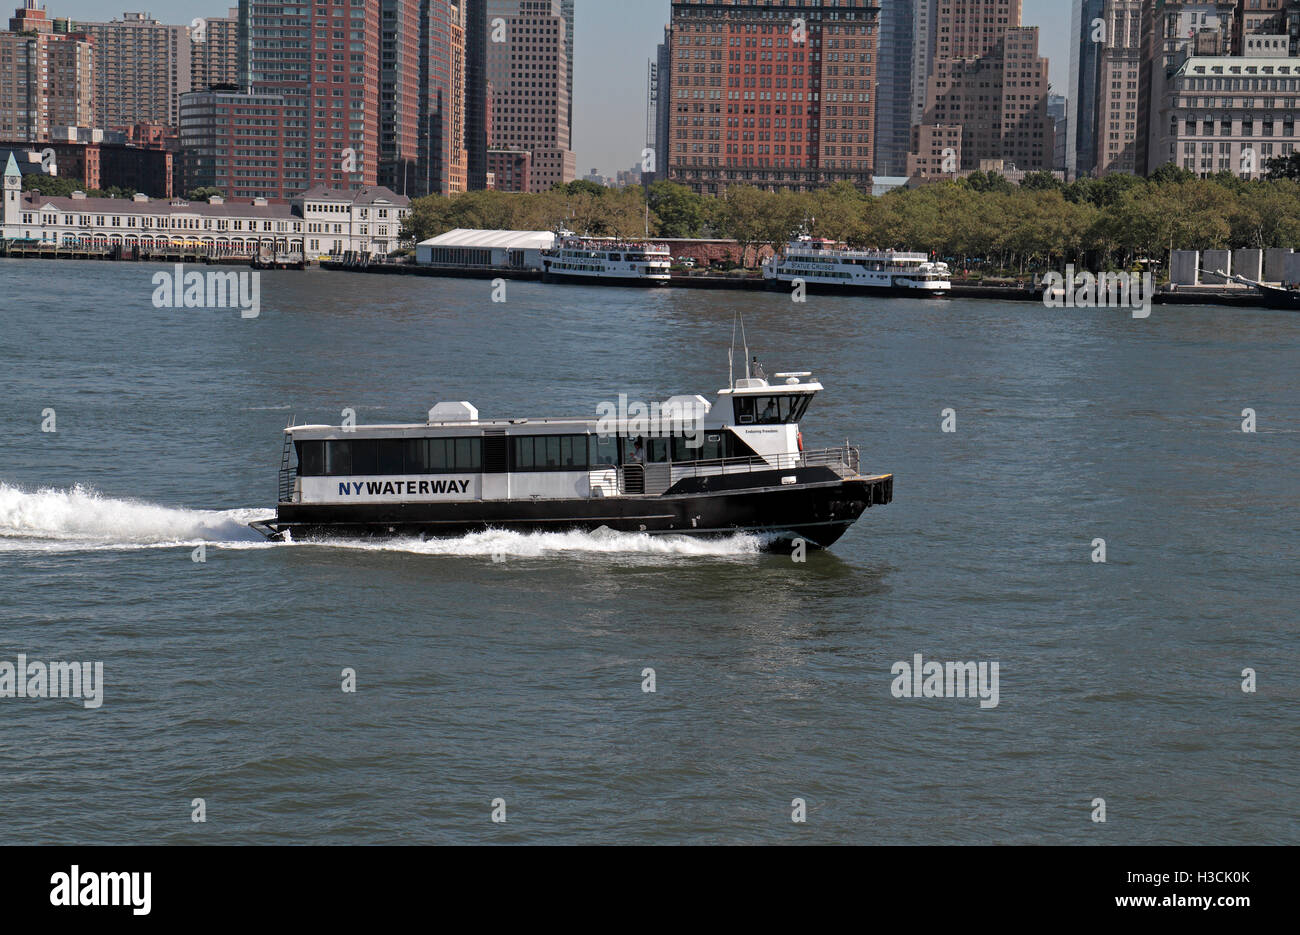 A NY Waterway cruise boat in Upper New York Bay, Manhattan, New York, United States. Stock Photo